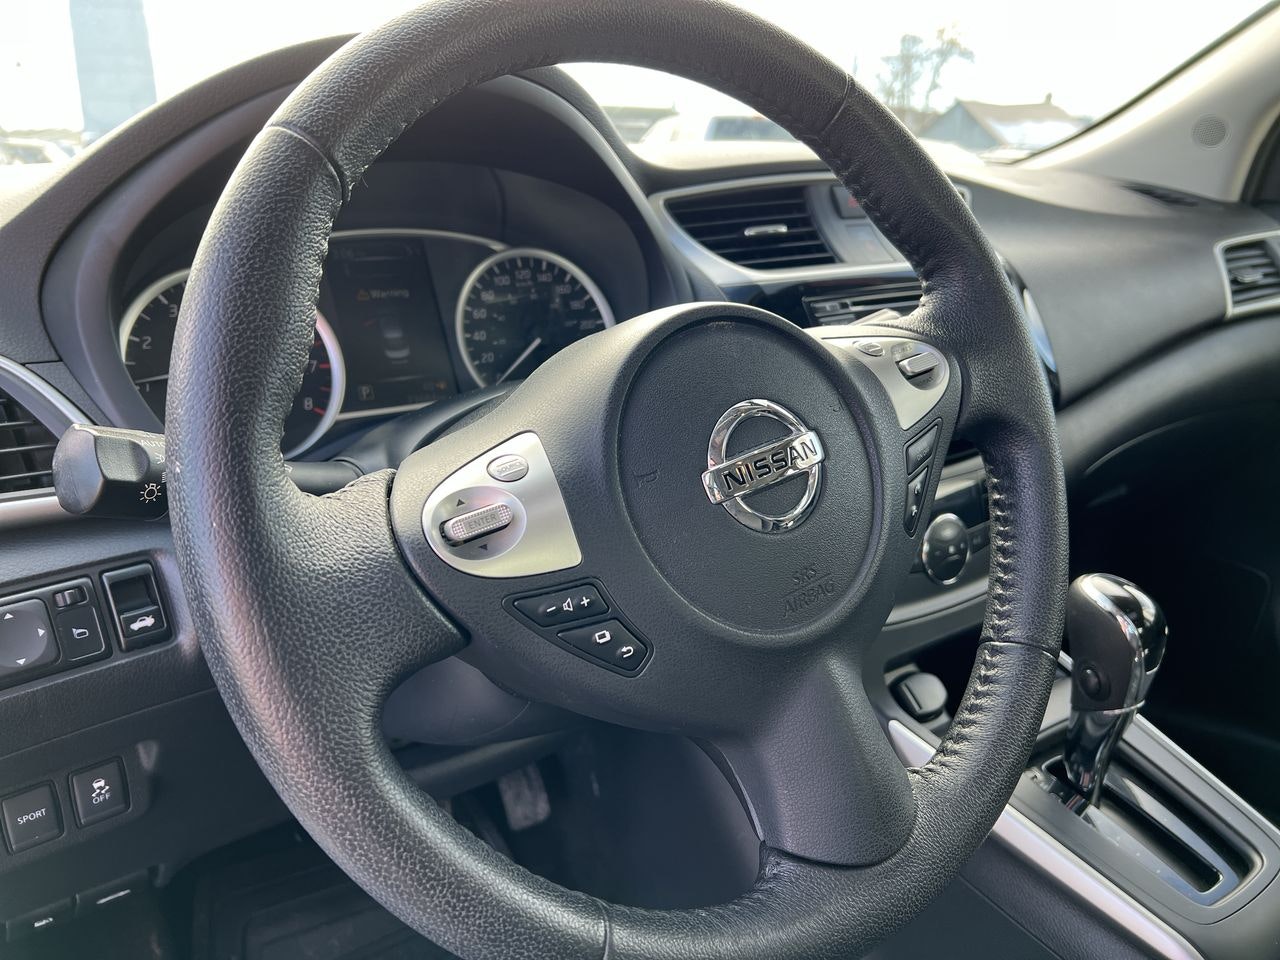 2018 Nissan Sentra - P20896 Full Image 14